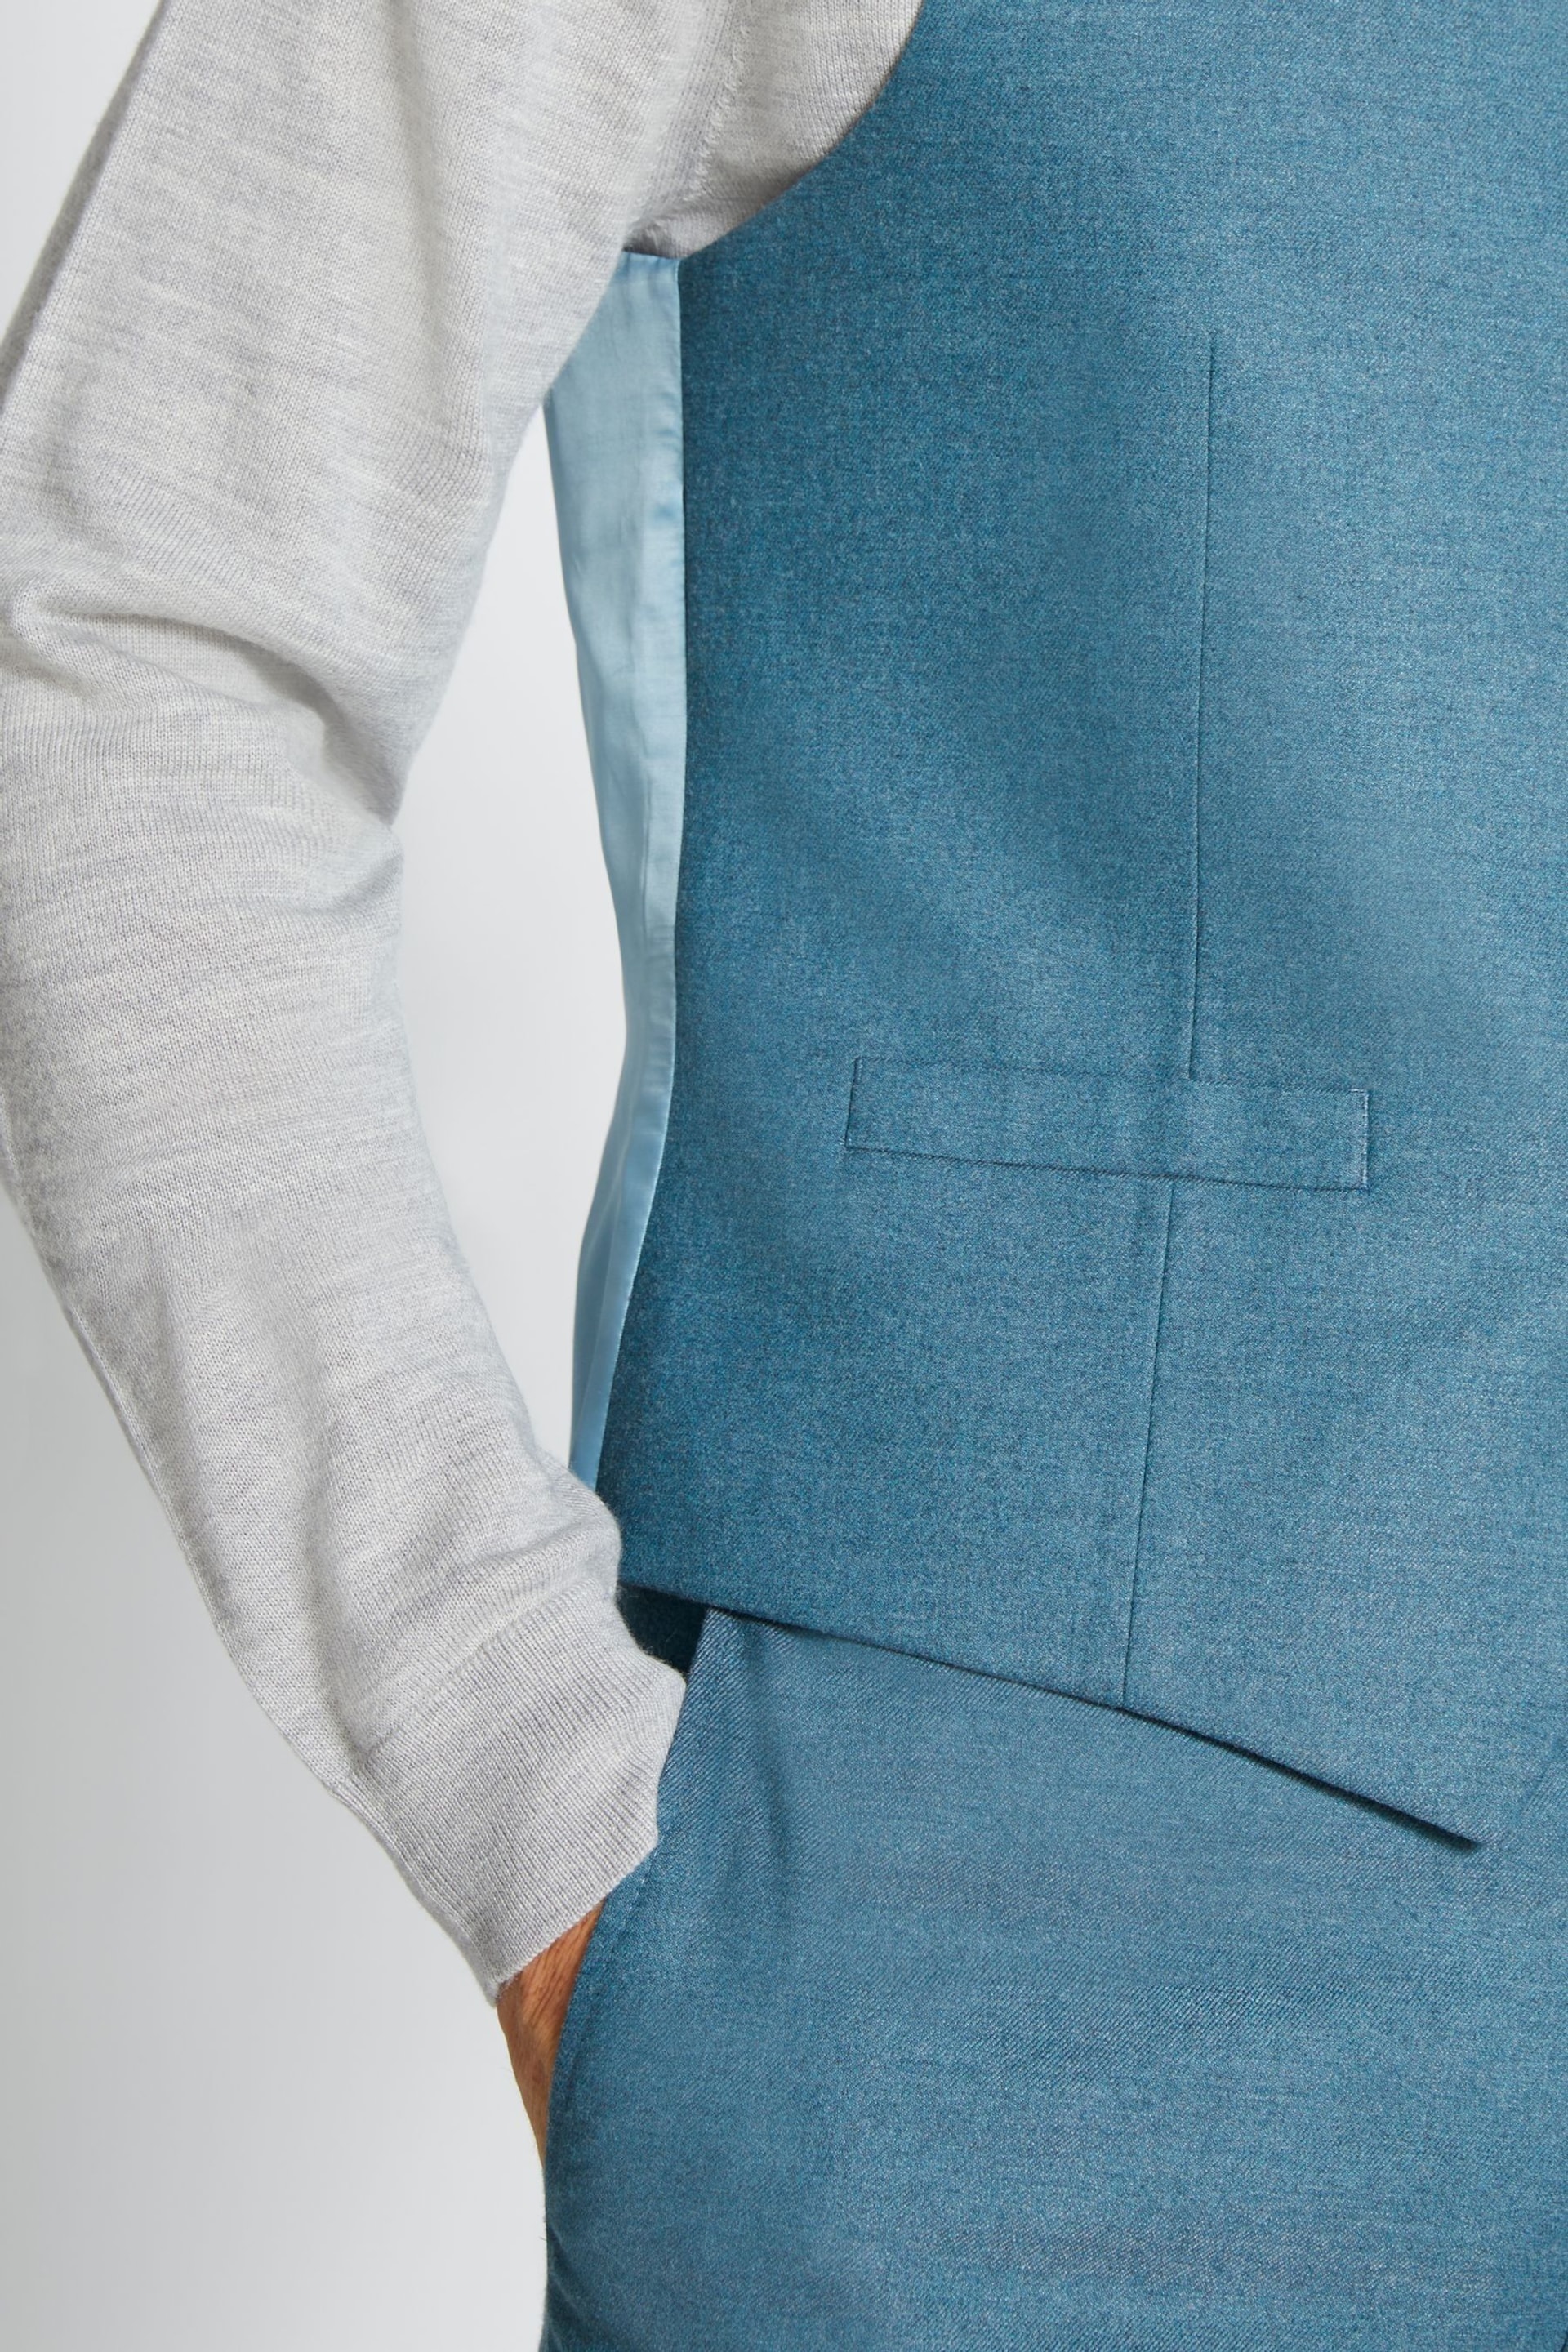 MOSS Blue Flannel Suit Waistcoat - Image 3 of 3